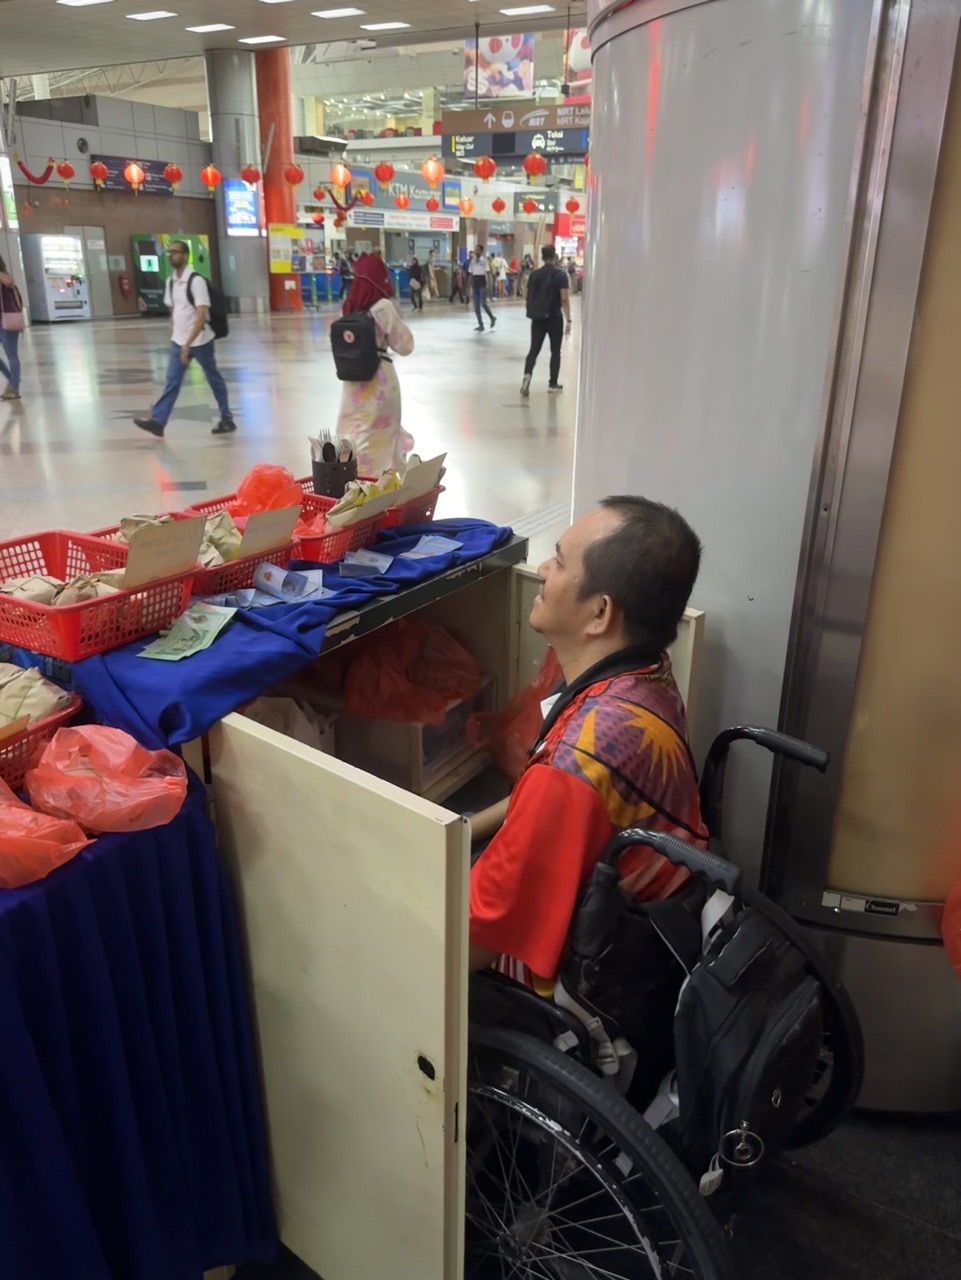 Mohd in a wheelchair selling nasi lemak